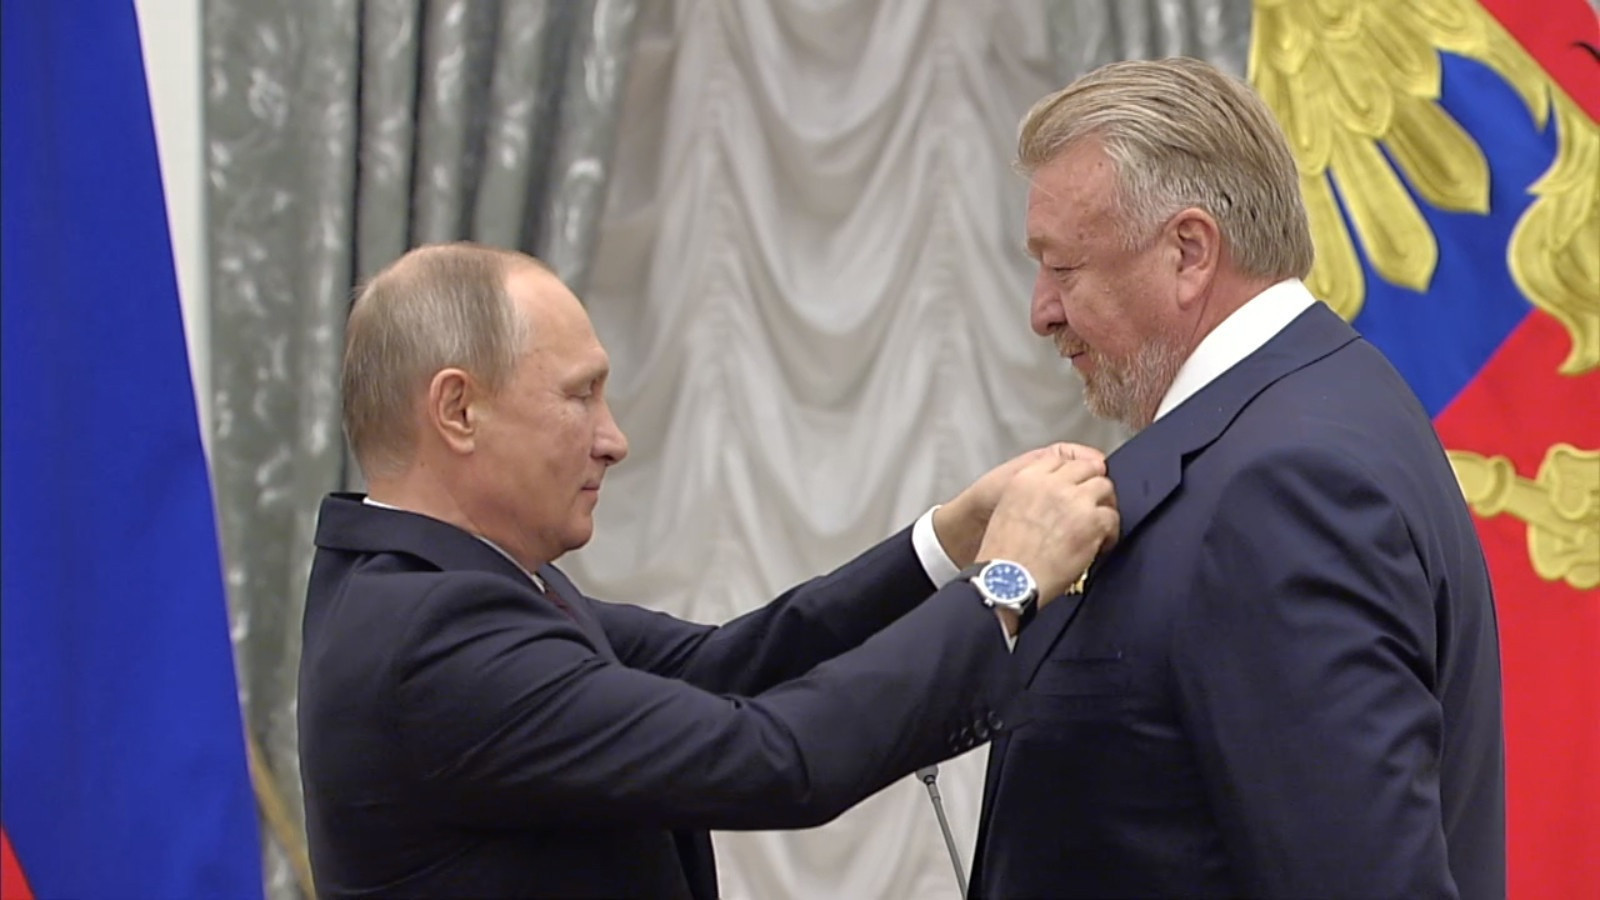 Vasily Titov receives the Order of Friendship from Russian President Vladimir Putin in 2017 ©Russian Gymnastics Federation